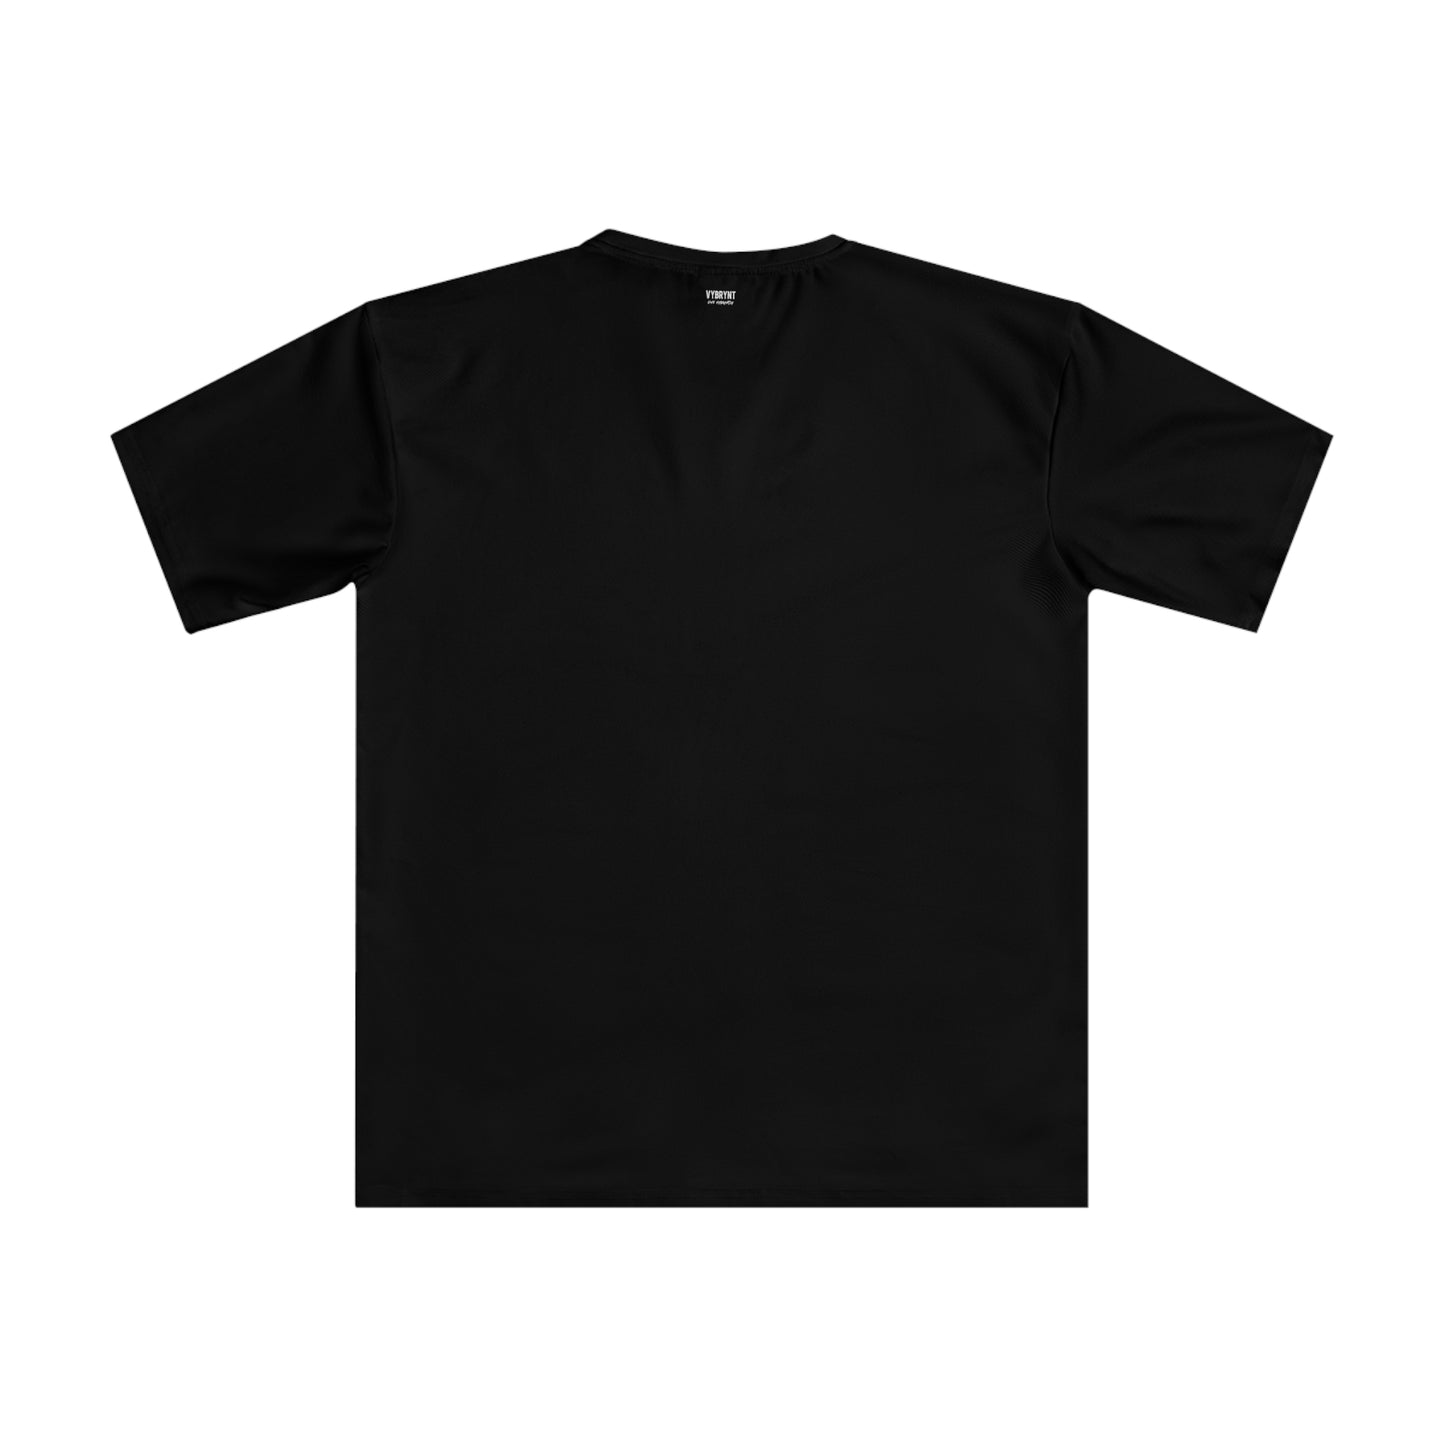 Urban Strength Men's Black T-shirt